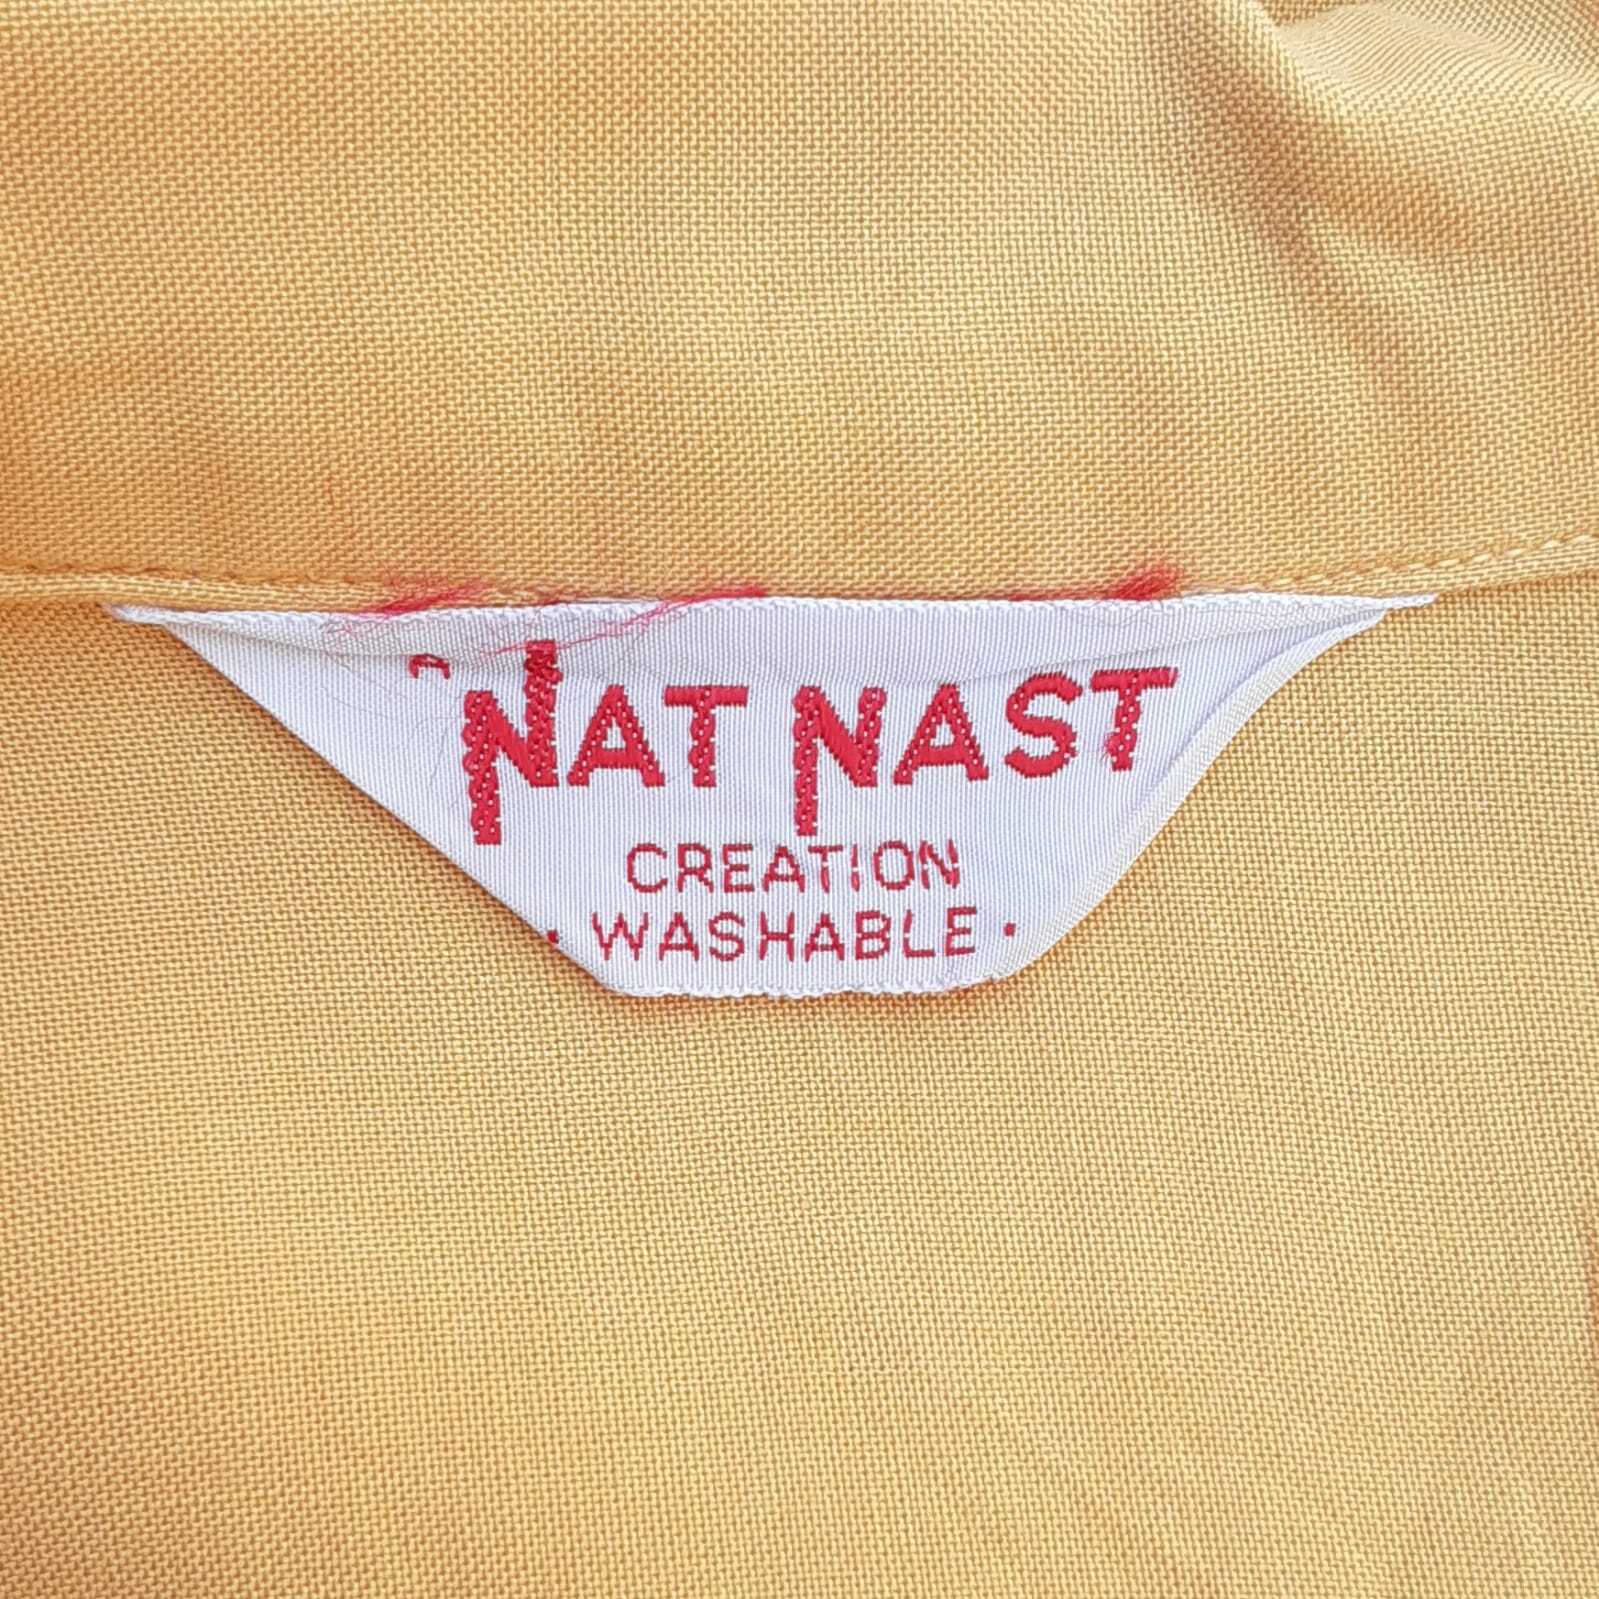 50s NAT NAST ナットナスト ボーリングシャツ ヴィンテージ